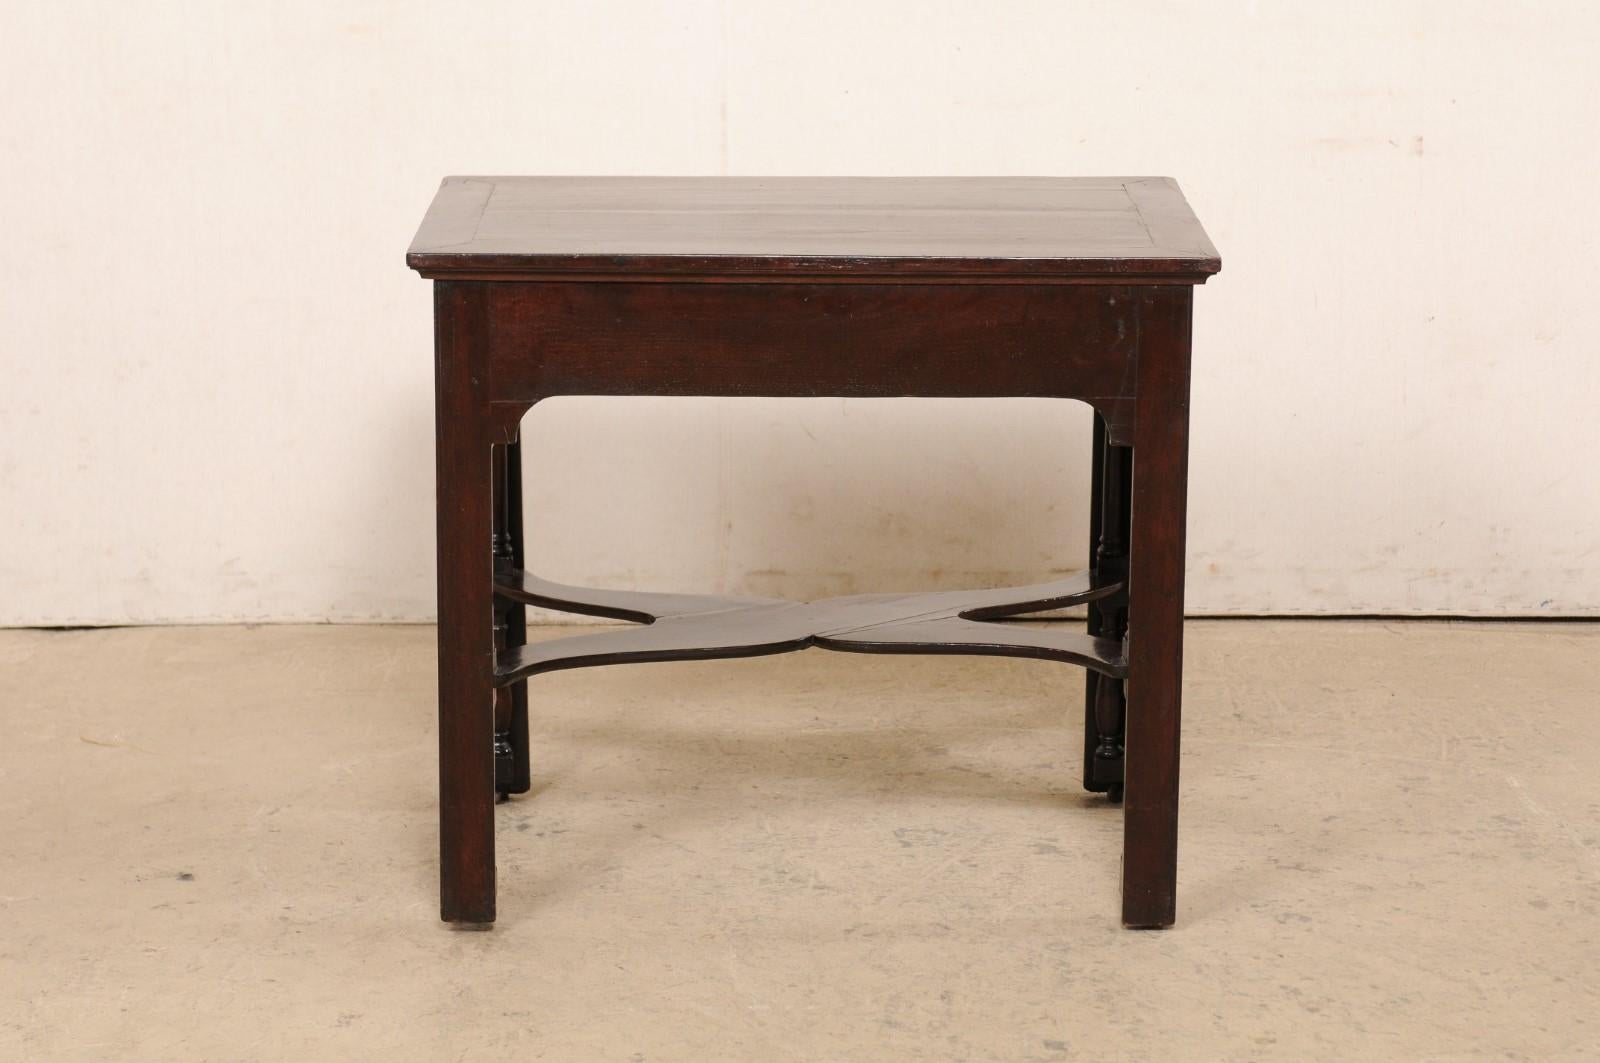 18th C. English Architect's Table w/Unique Legs, Expanding Top, & Candle Shelves For Sale 4